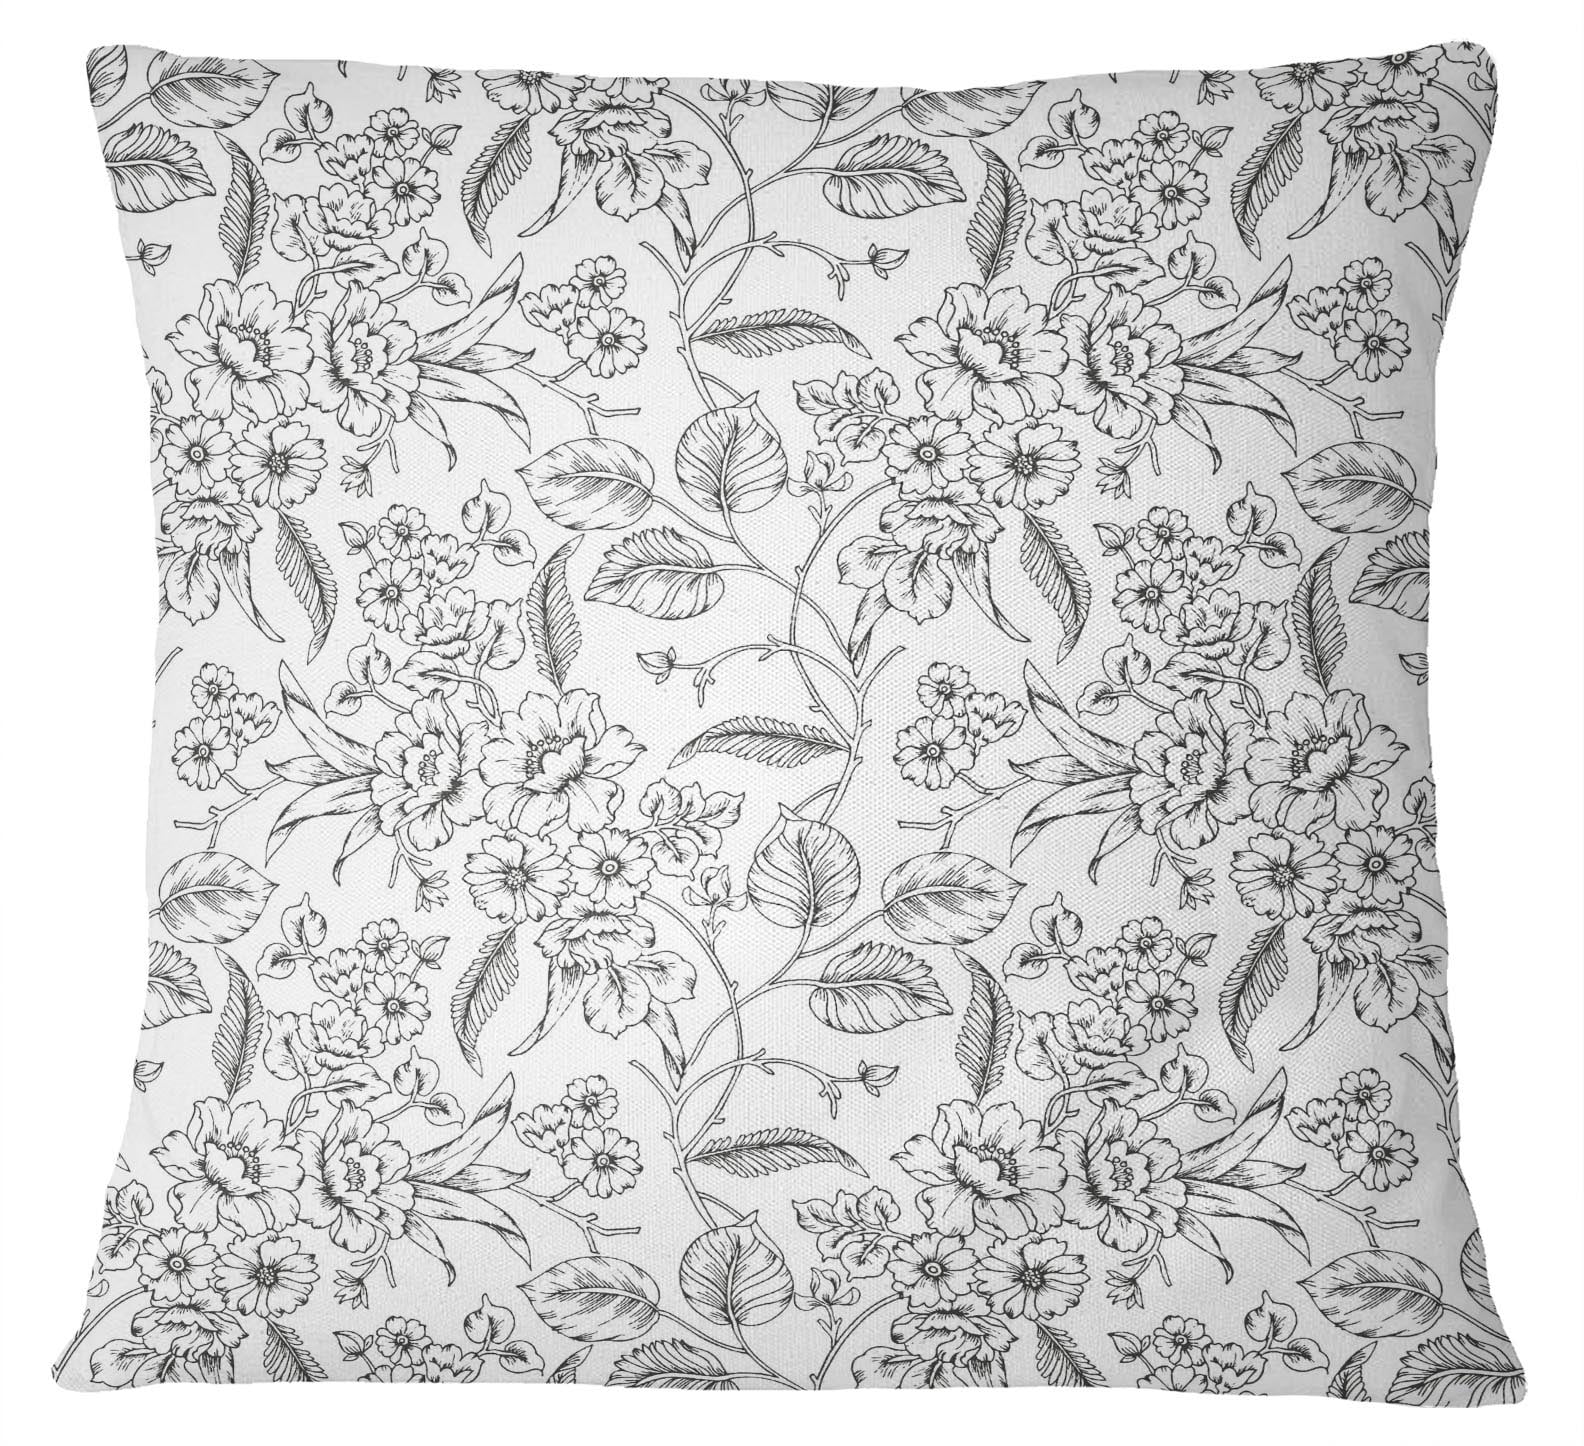 S4Sassy Army Floral Print Cotton Poplin Rectangle Pillow Sham 1 Pair 